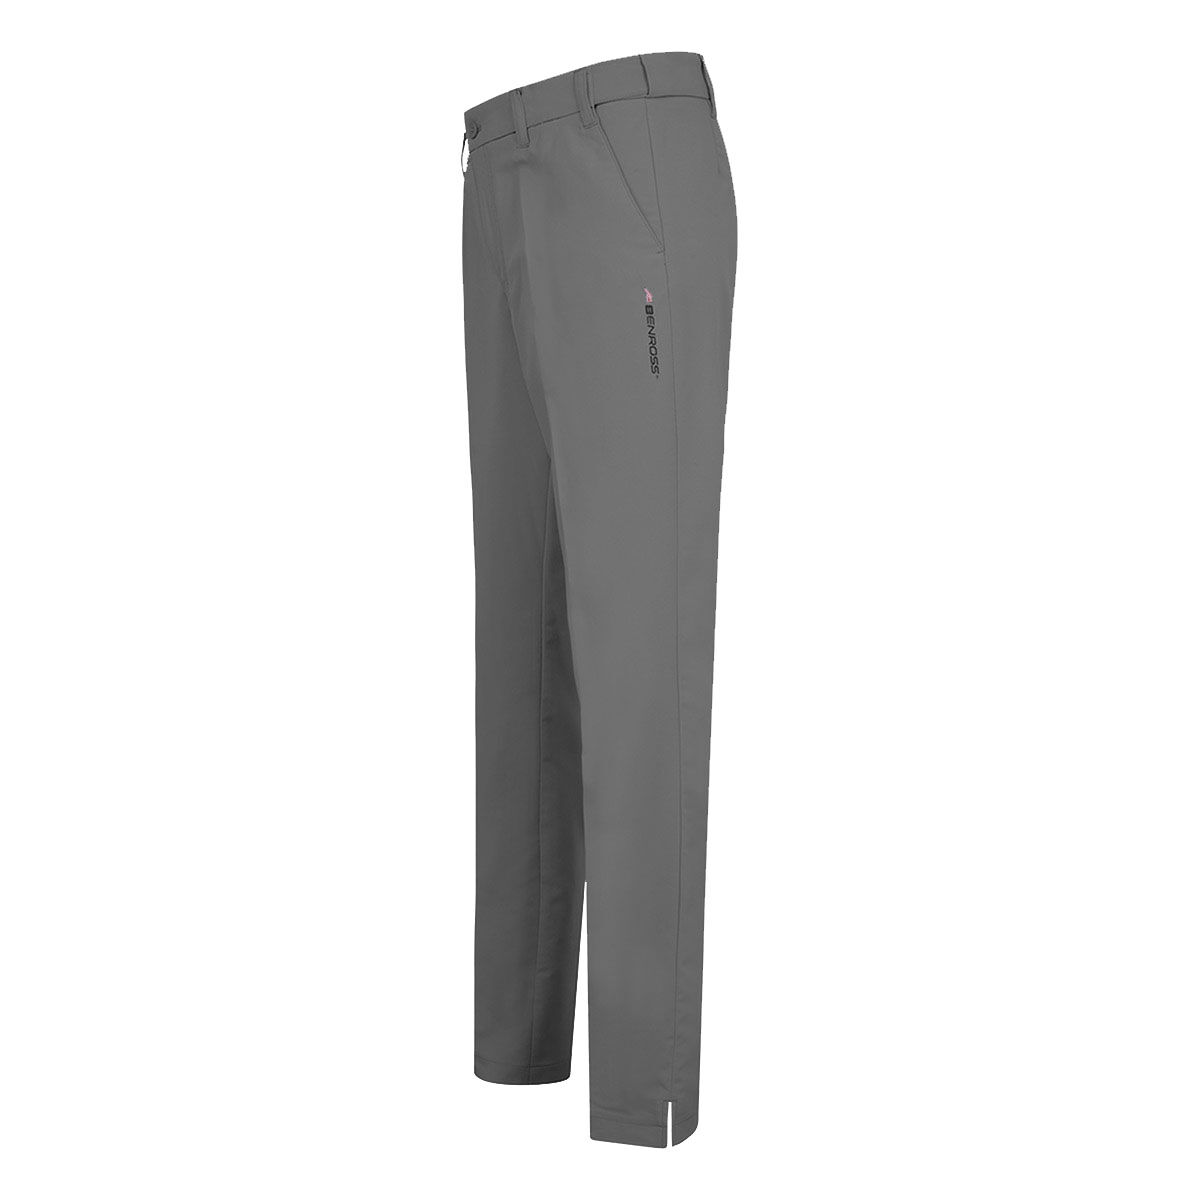 Benross Grey Tech Golf Trousers, Mens, 34, Long | American Golf, Size: 34